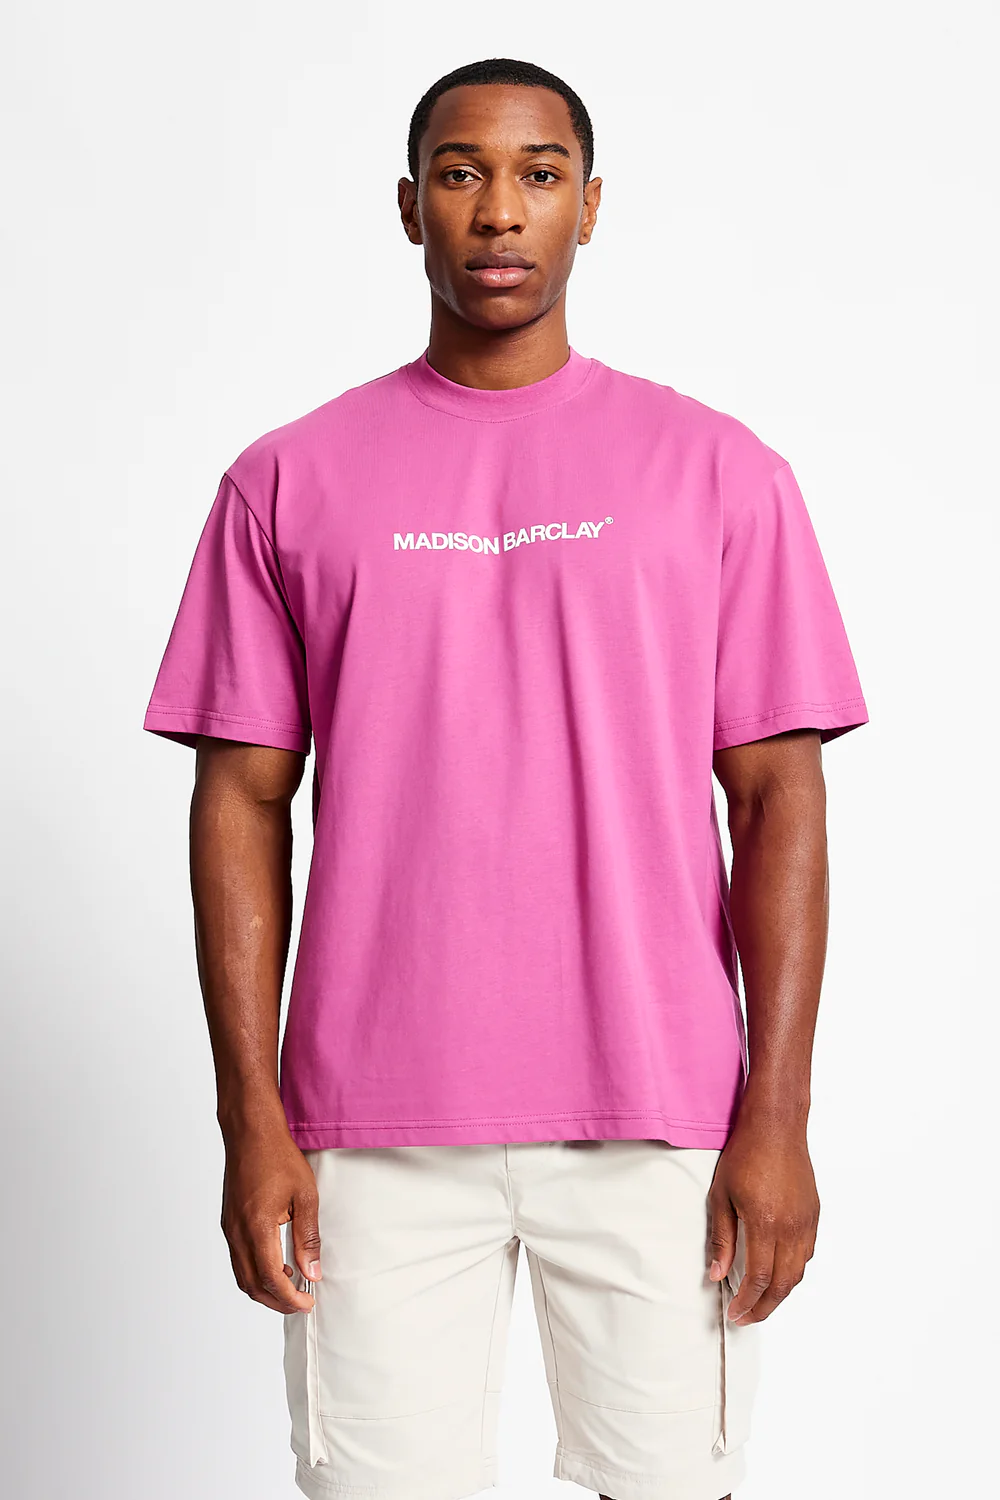 Madison Barclay - Flatbush T-Shirt - Berry Plum - Cartel Collective